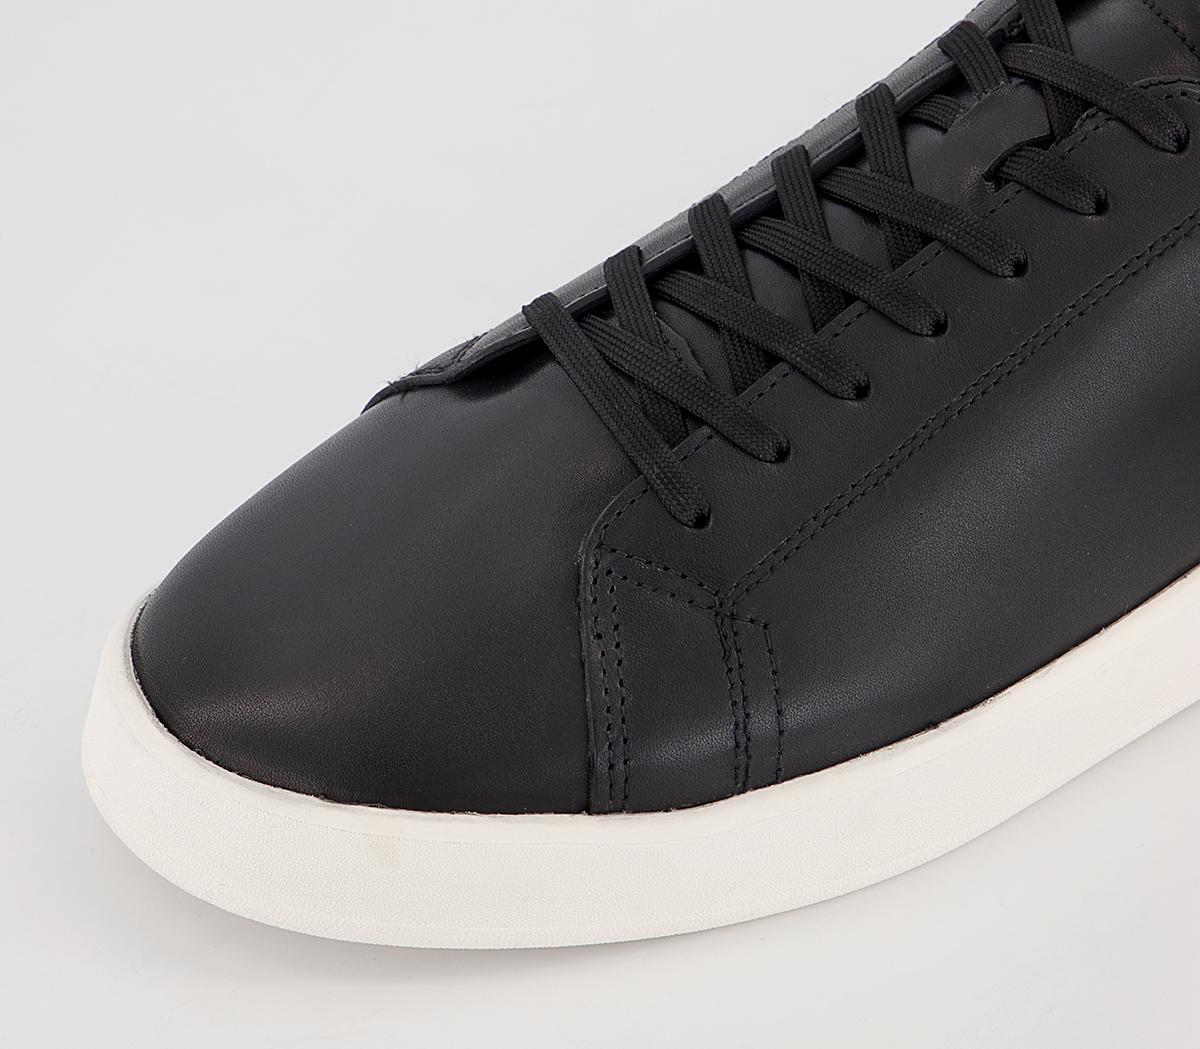 Vagabond Shoemakers Teo Trainers Black - Men's Casual Shoes